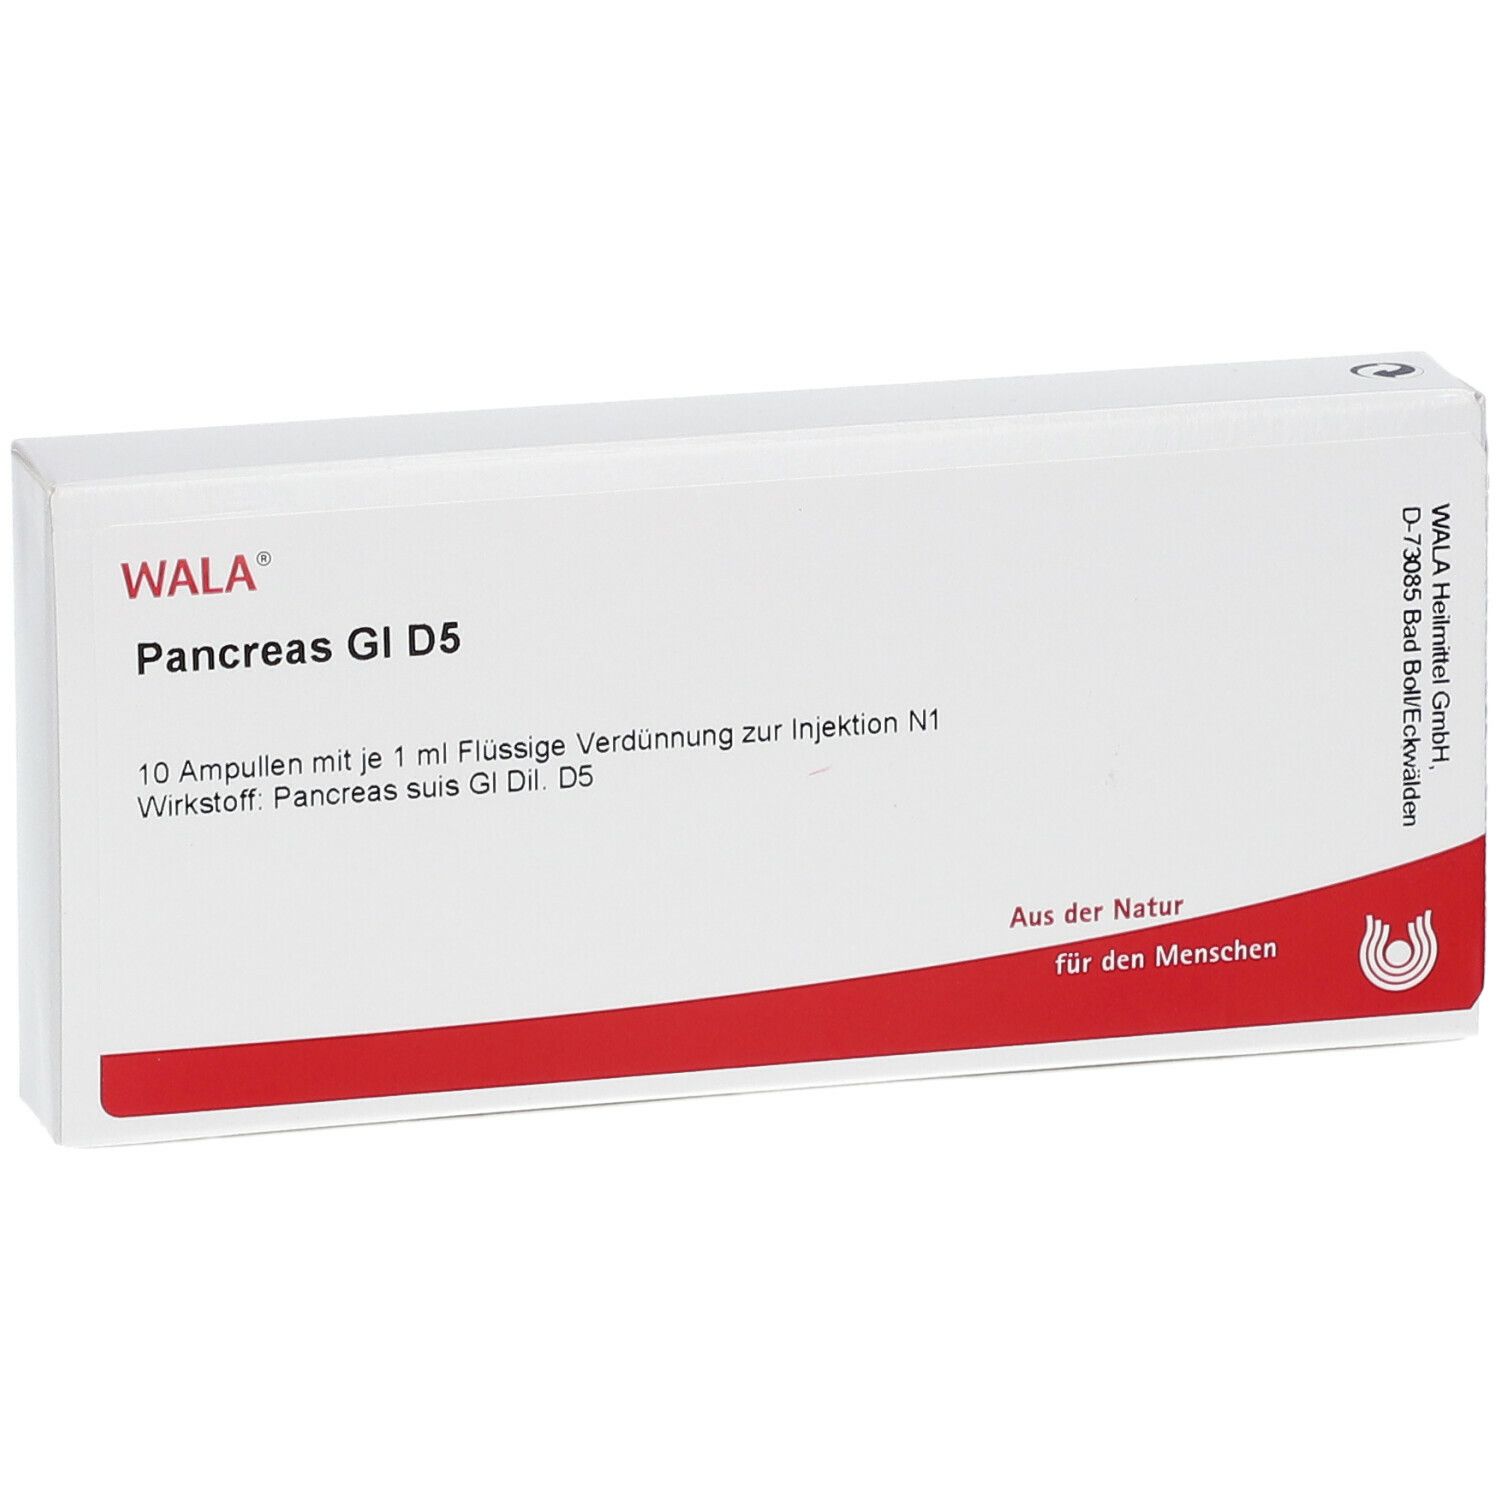 WALA® Pancreas Gl D 5 Amp.